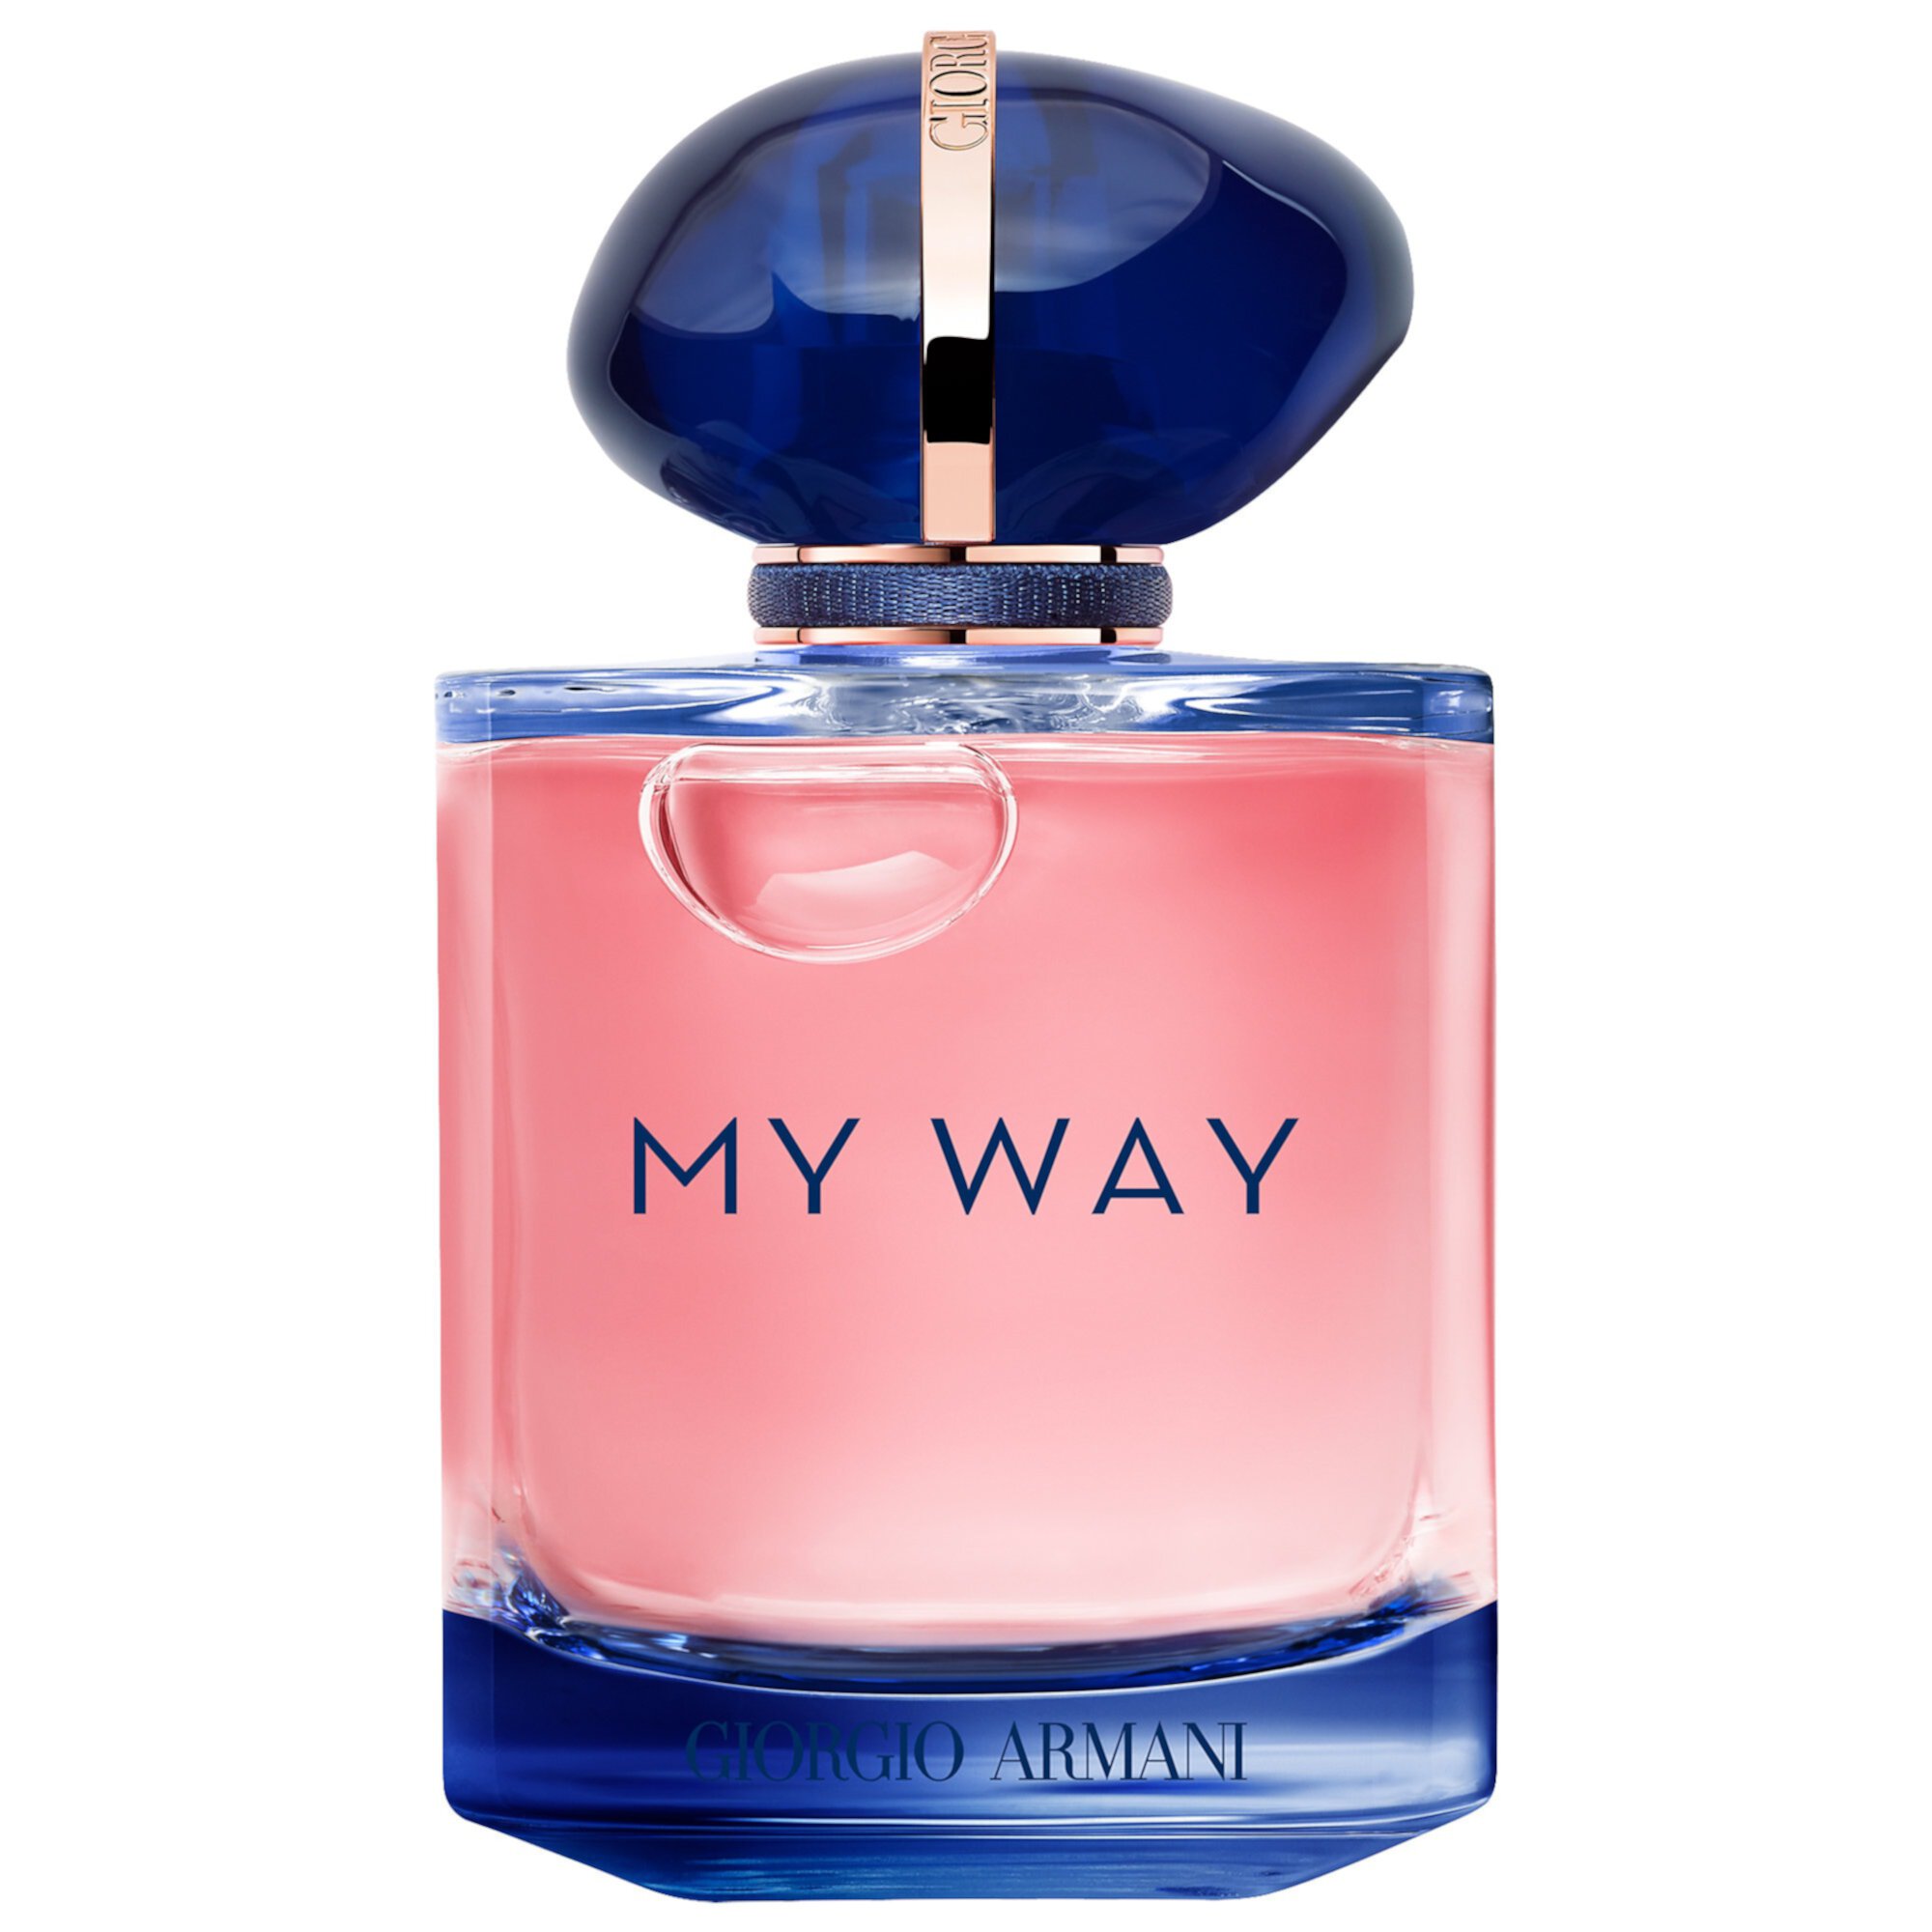 My Way Eau de Parfum Intense Armani Beauty